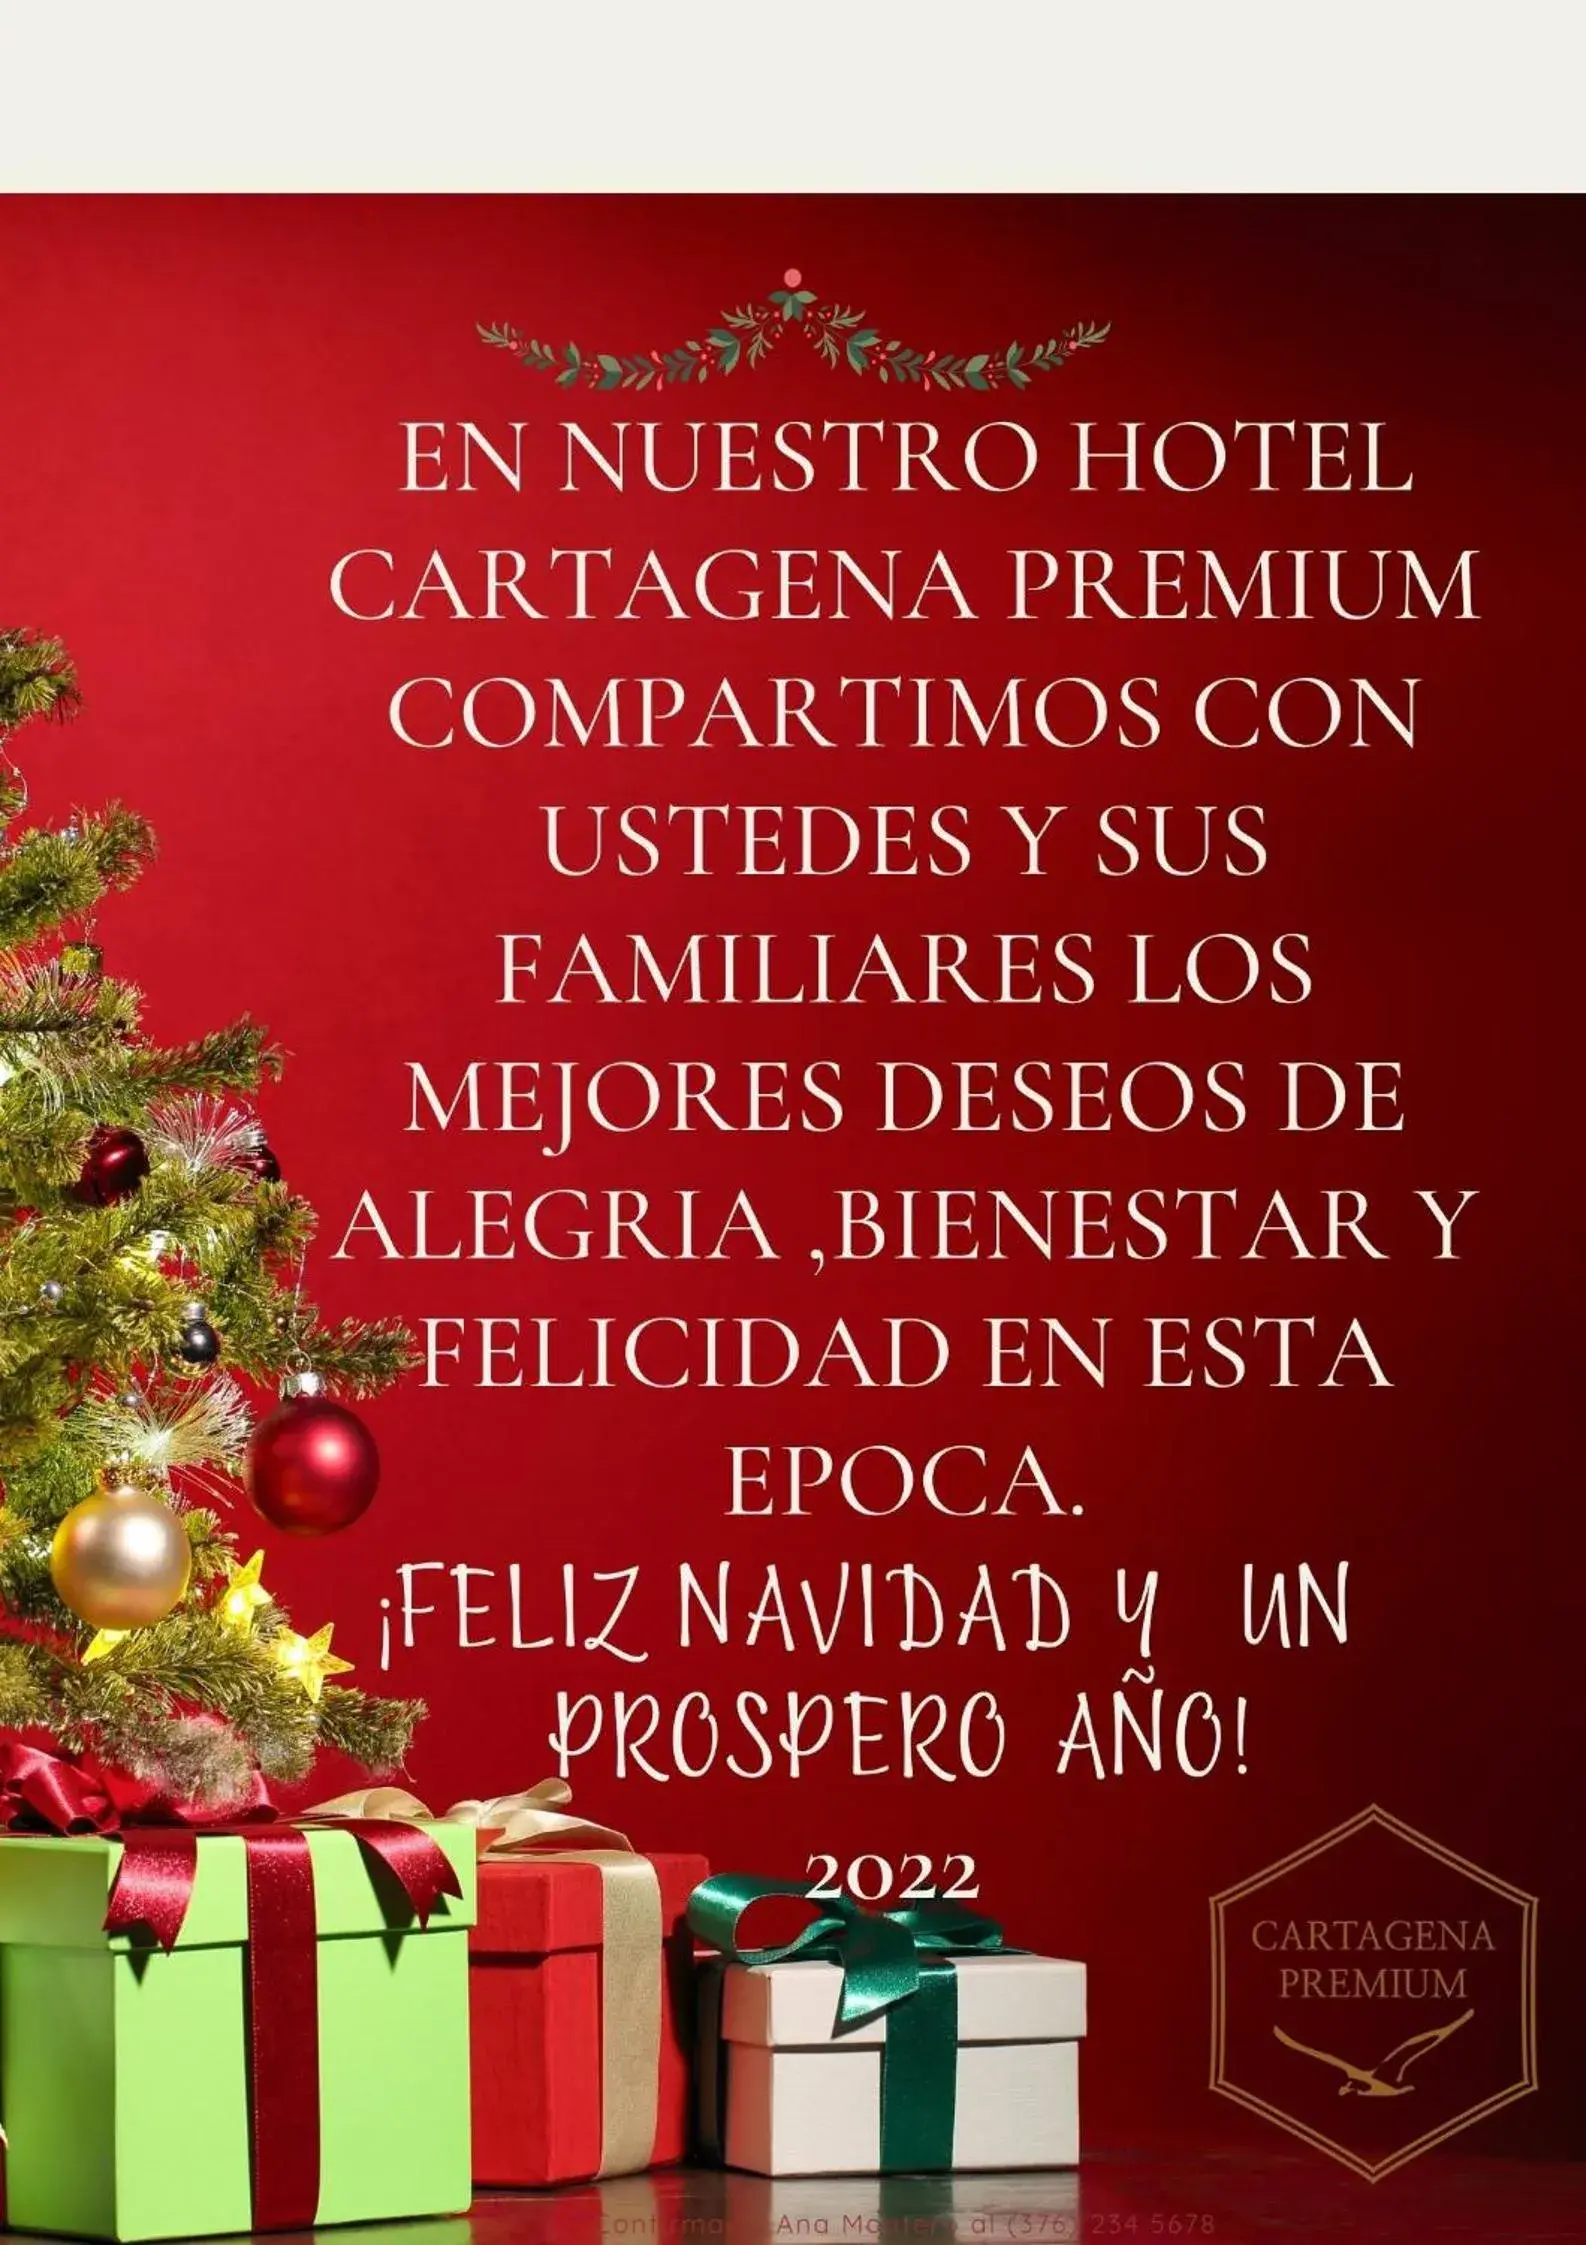 Certificate/Award in Hotel Cartagena Premium